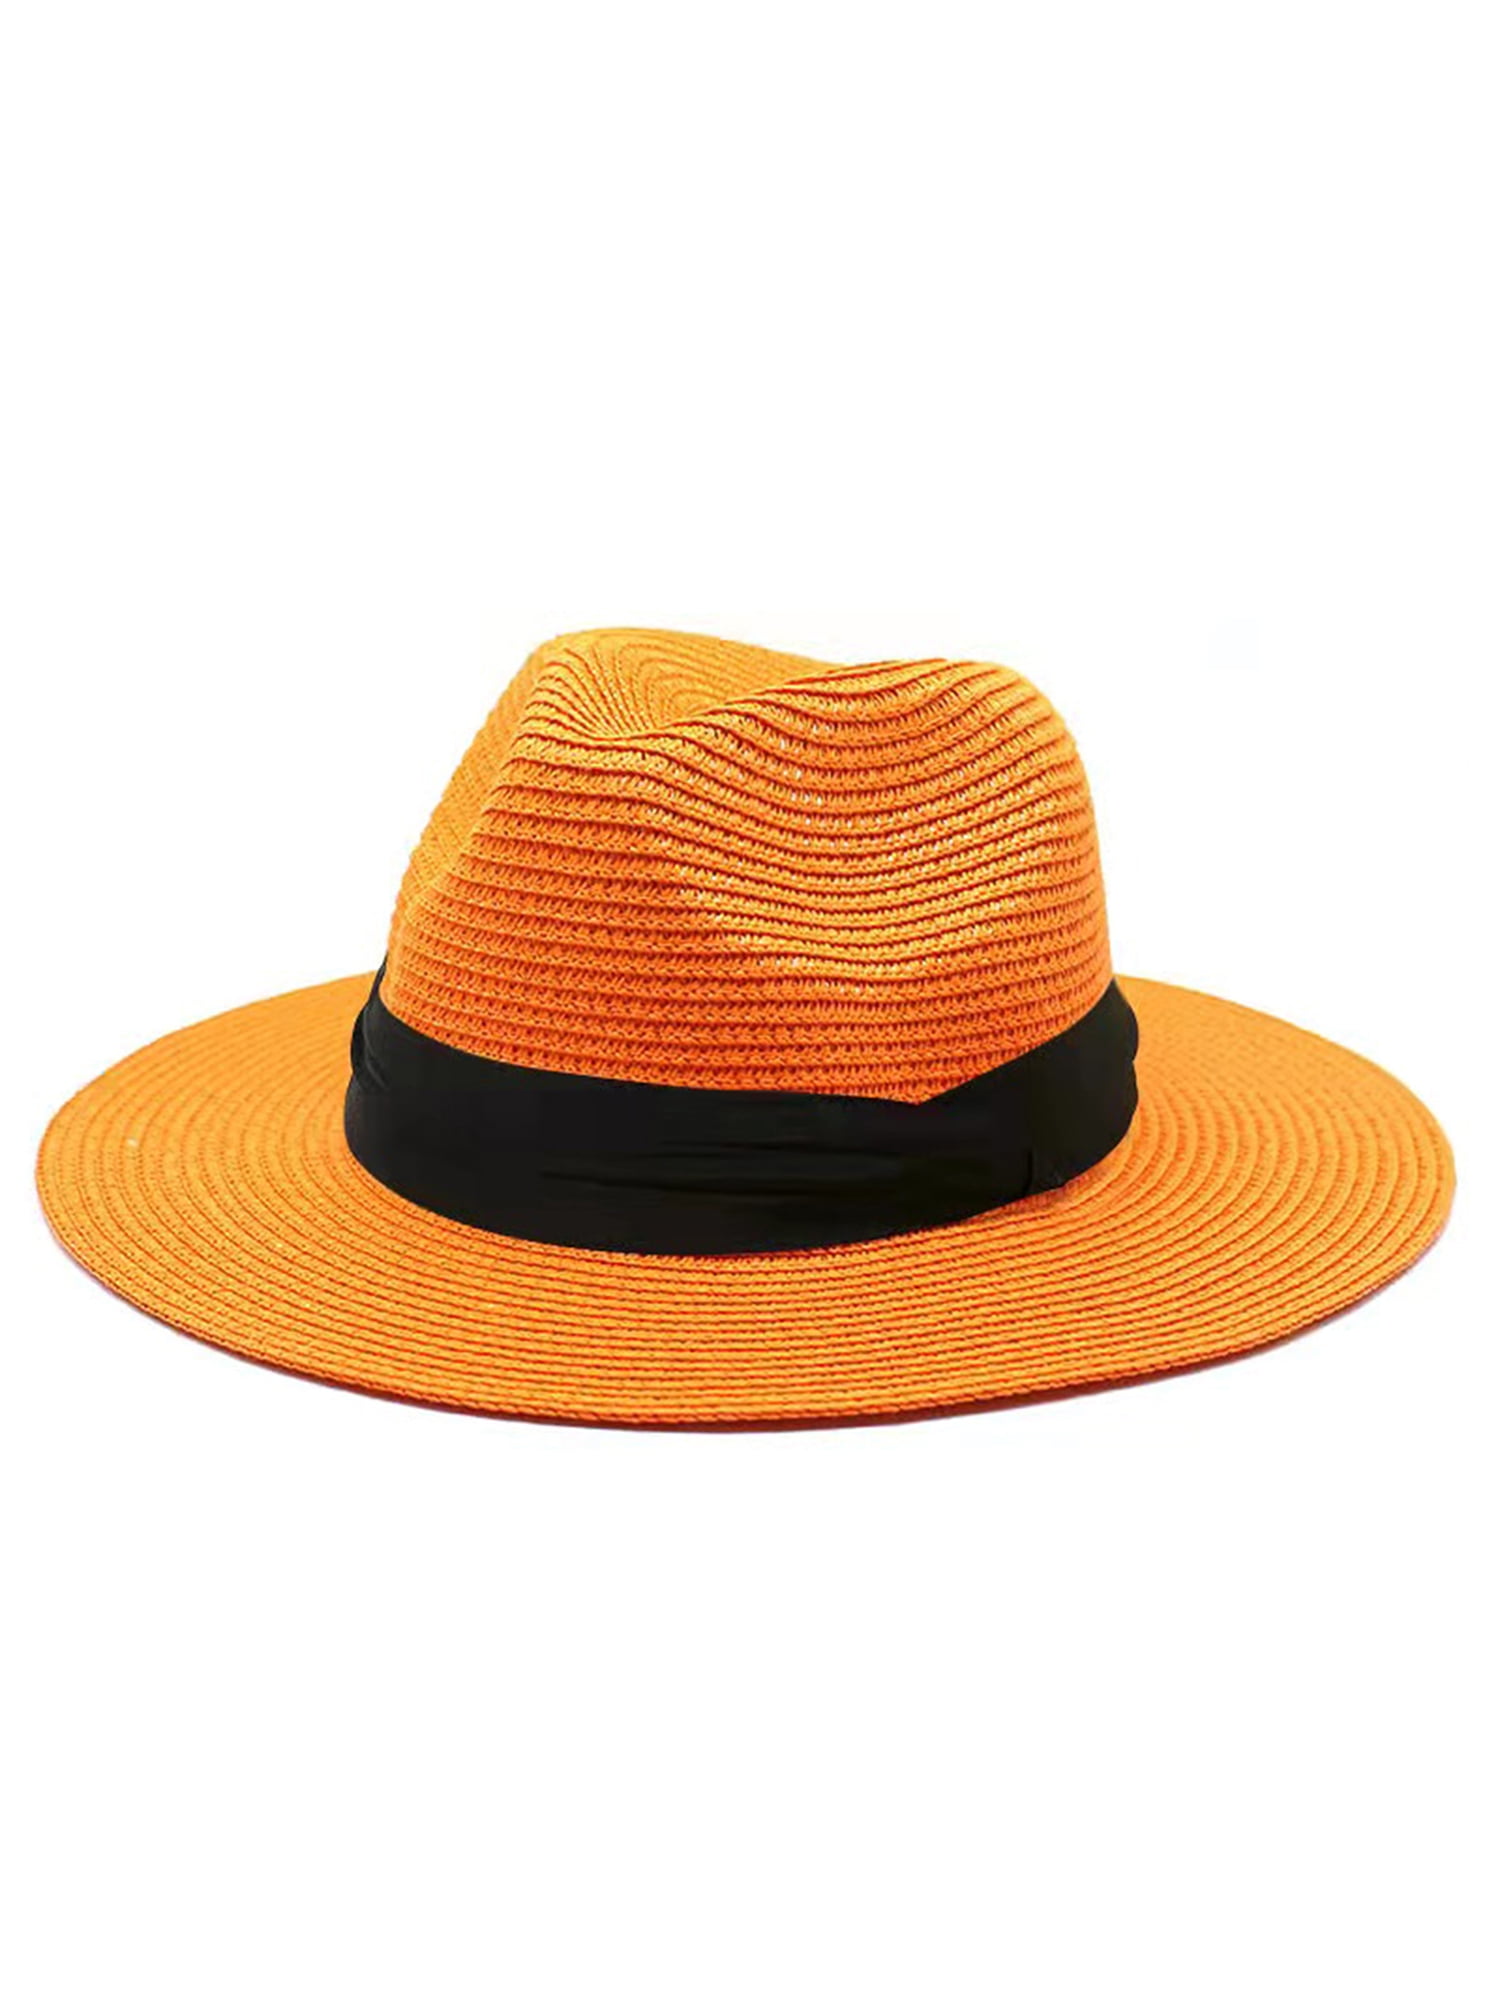 Women Men Straw Hat Wide Brim Cap Lightweight Protective Sun Beach Hat for  Summer Fall Spring 